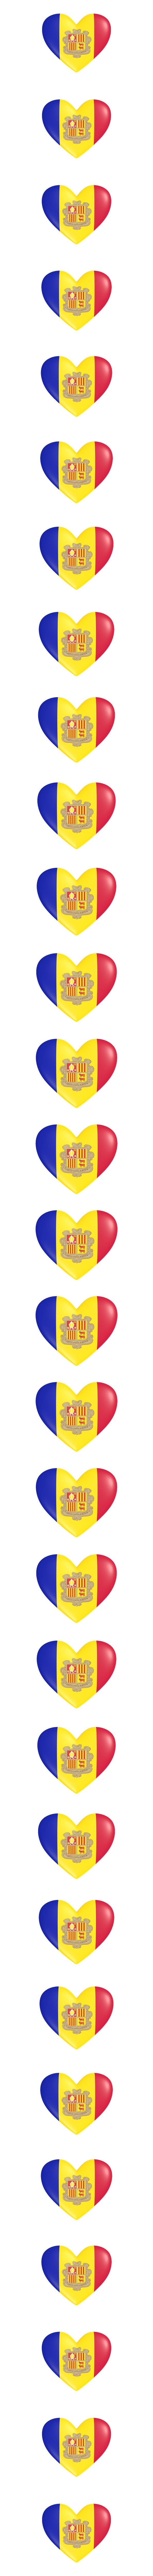 Andorra heart